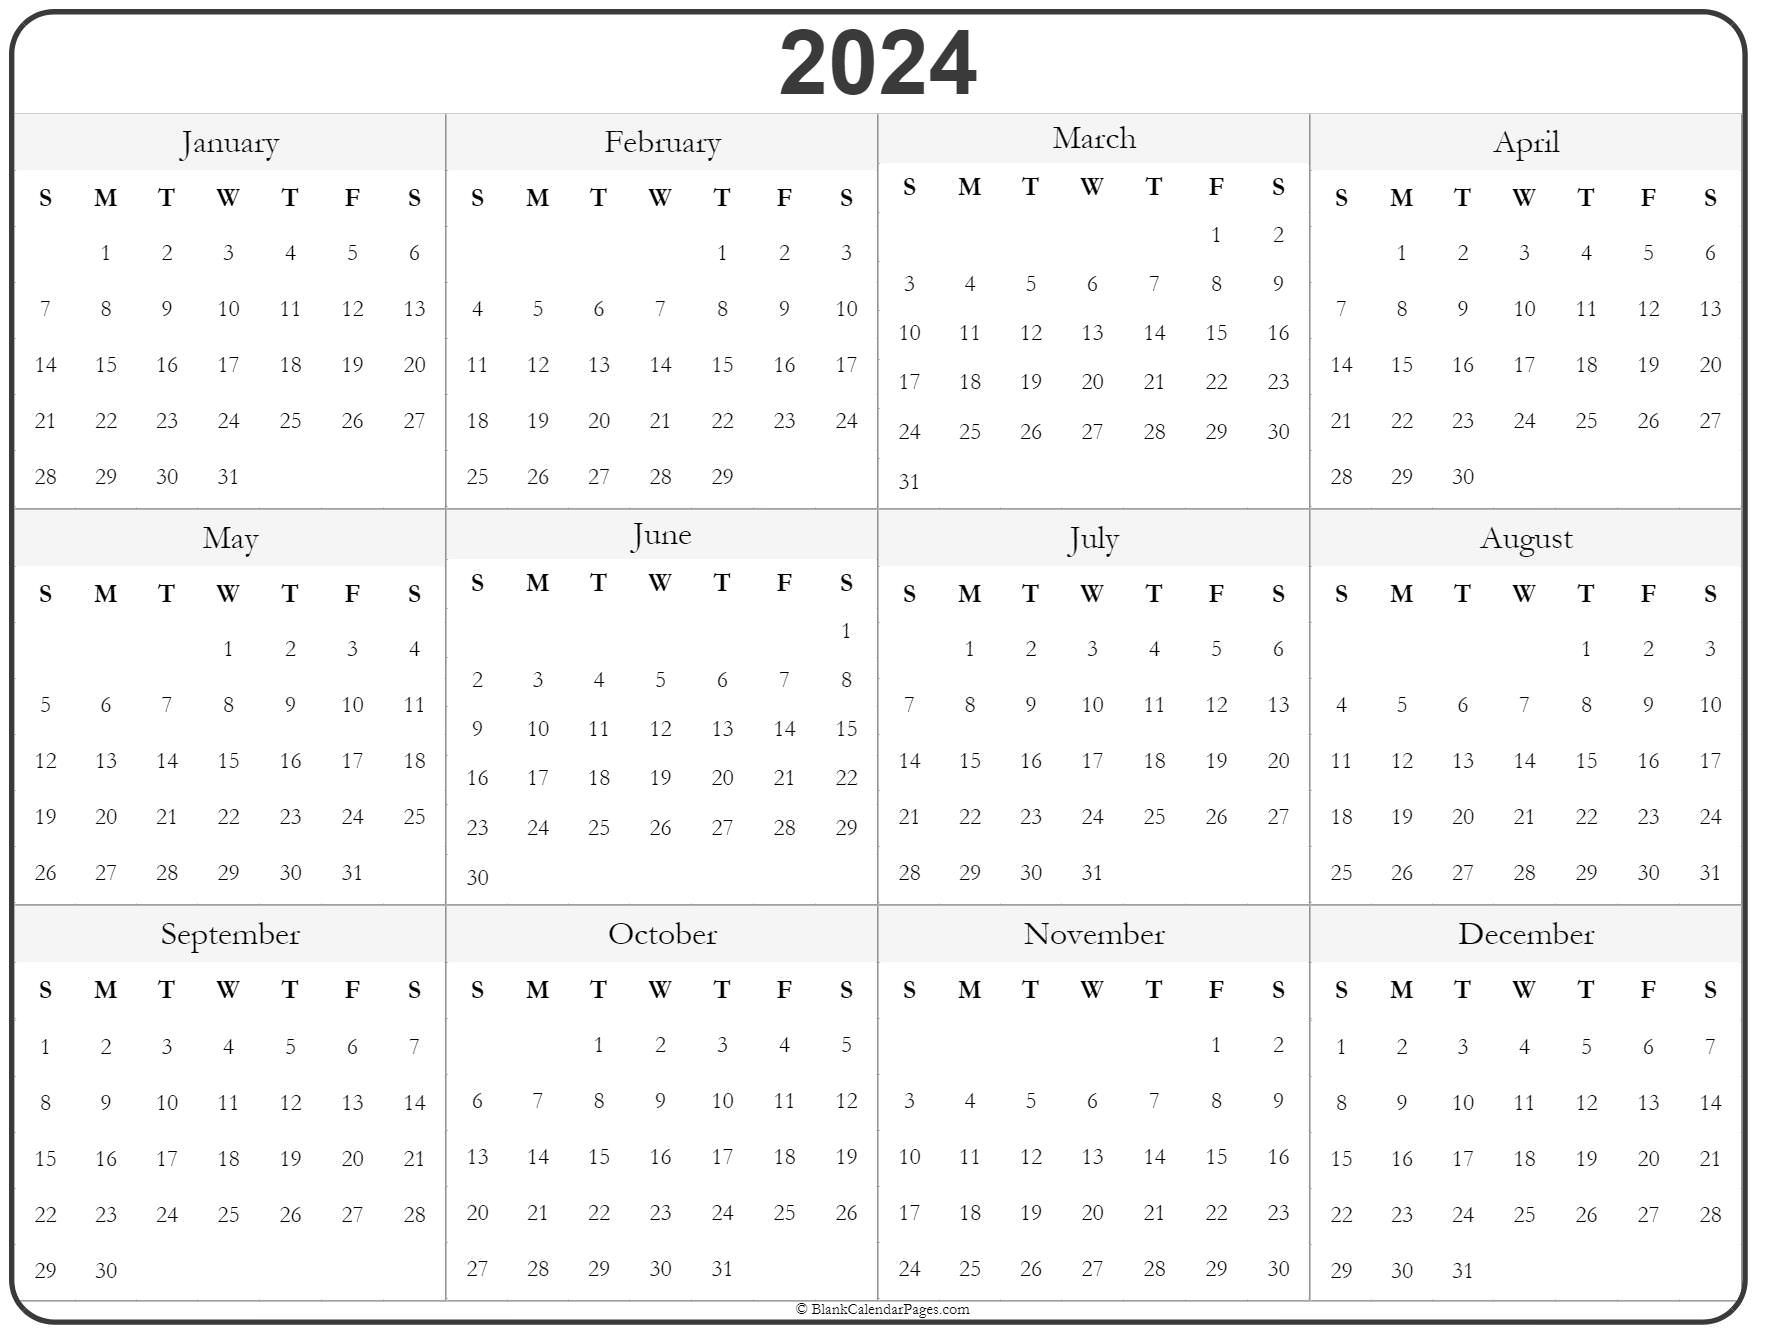 2024 Calendar Printable Cute Free 2024 Yearly Calendar Templates - Free Printable 2024 Calendar Coloring Pages